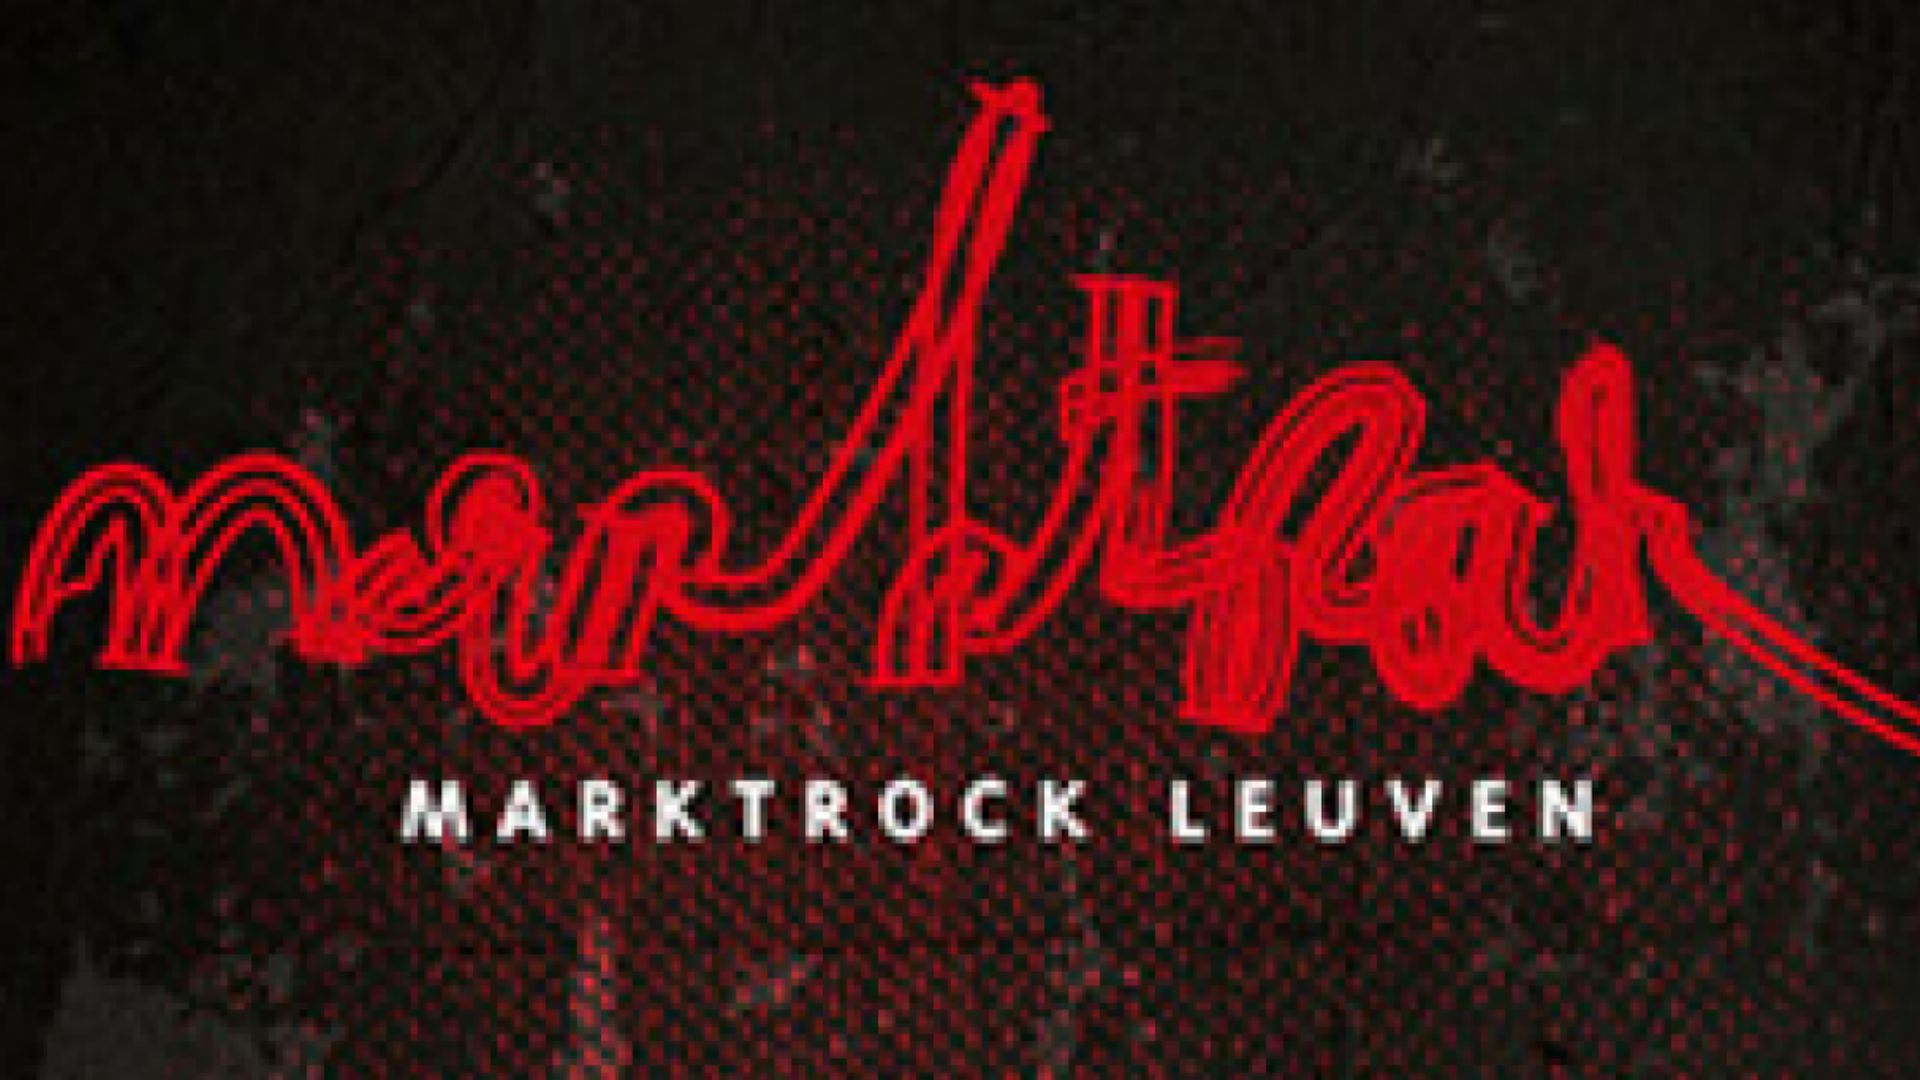 Le Marktrockfestival à Louvain a attiré 110.000 spectateurs